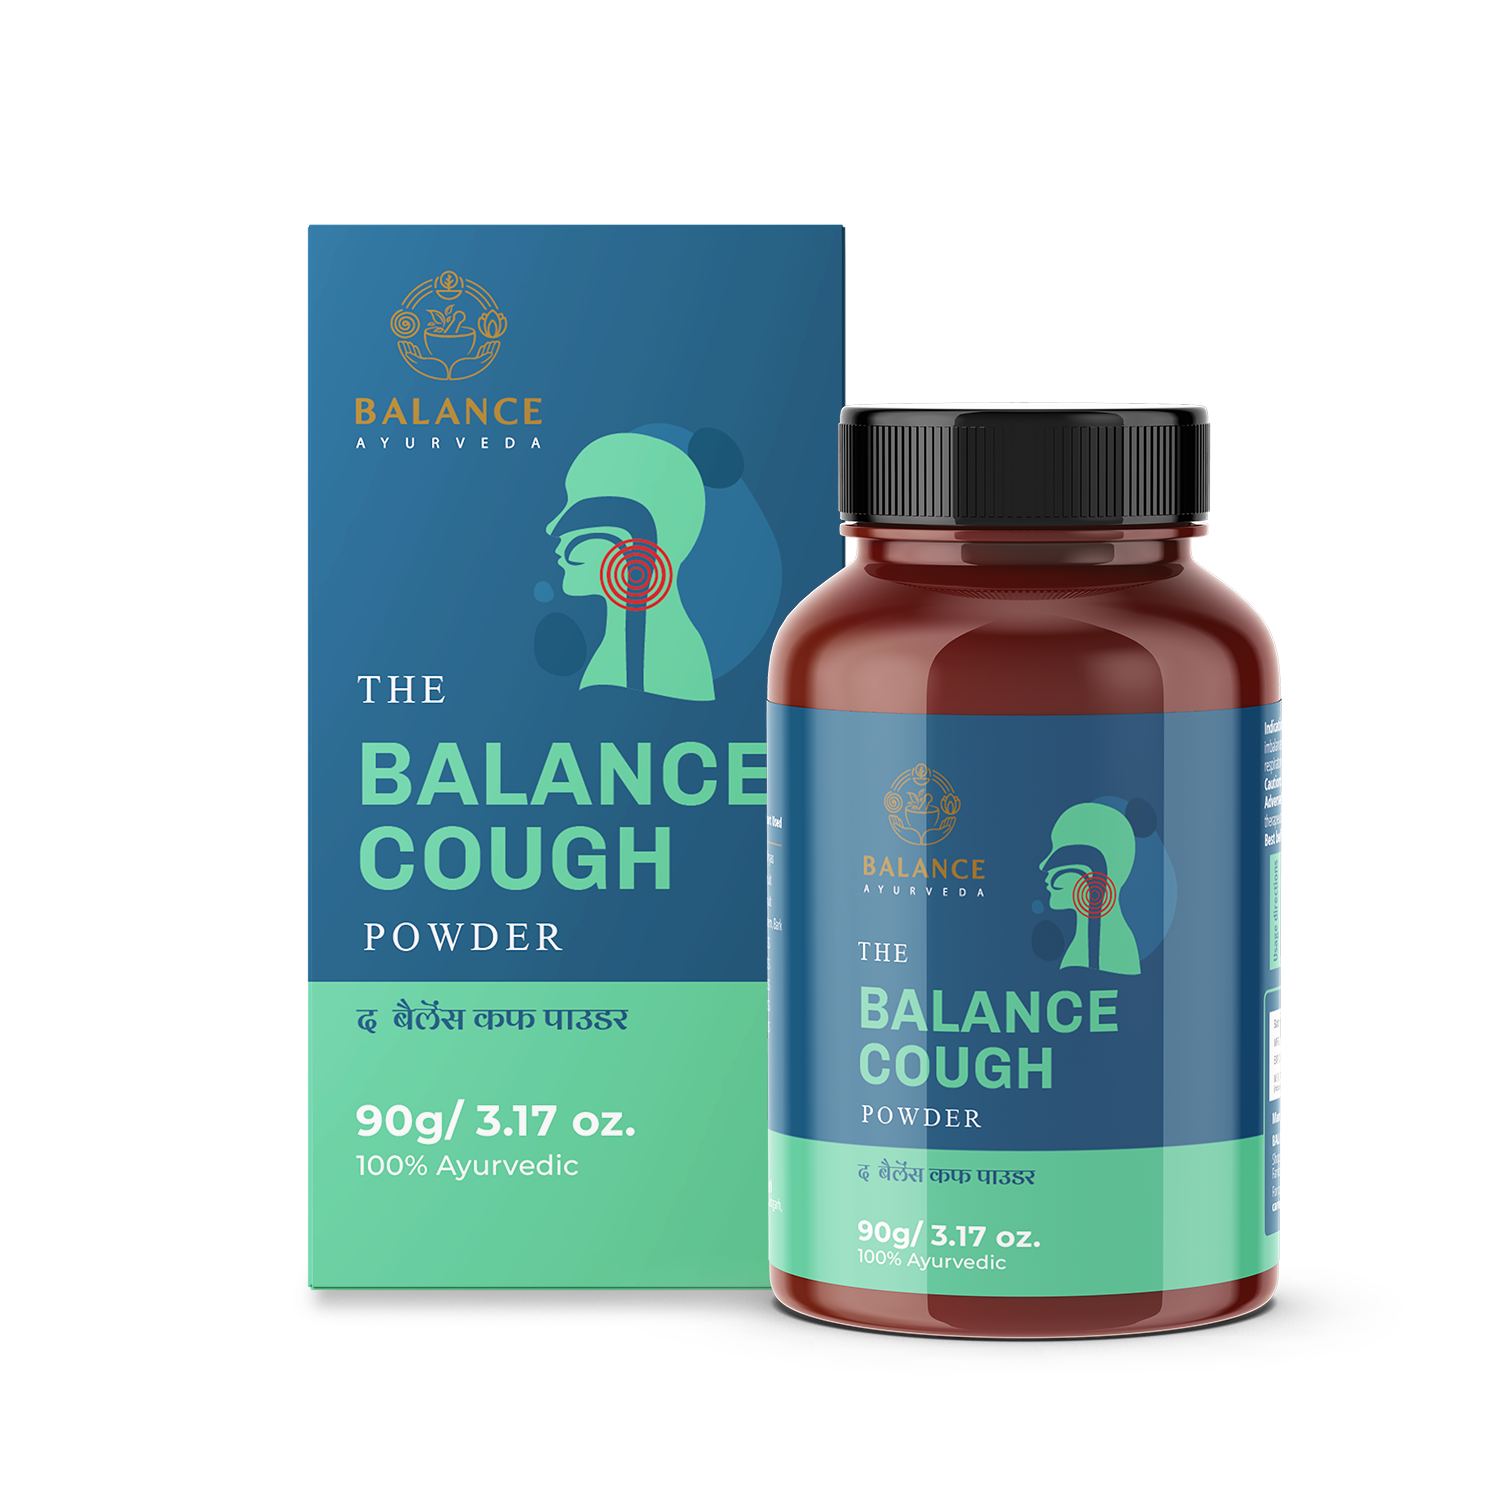 The Balance Cough Powder